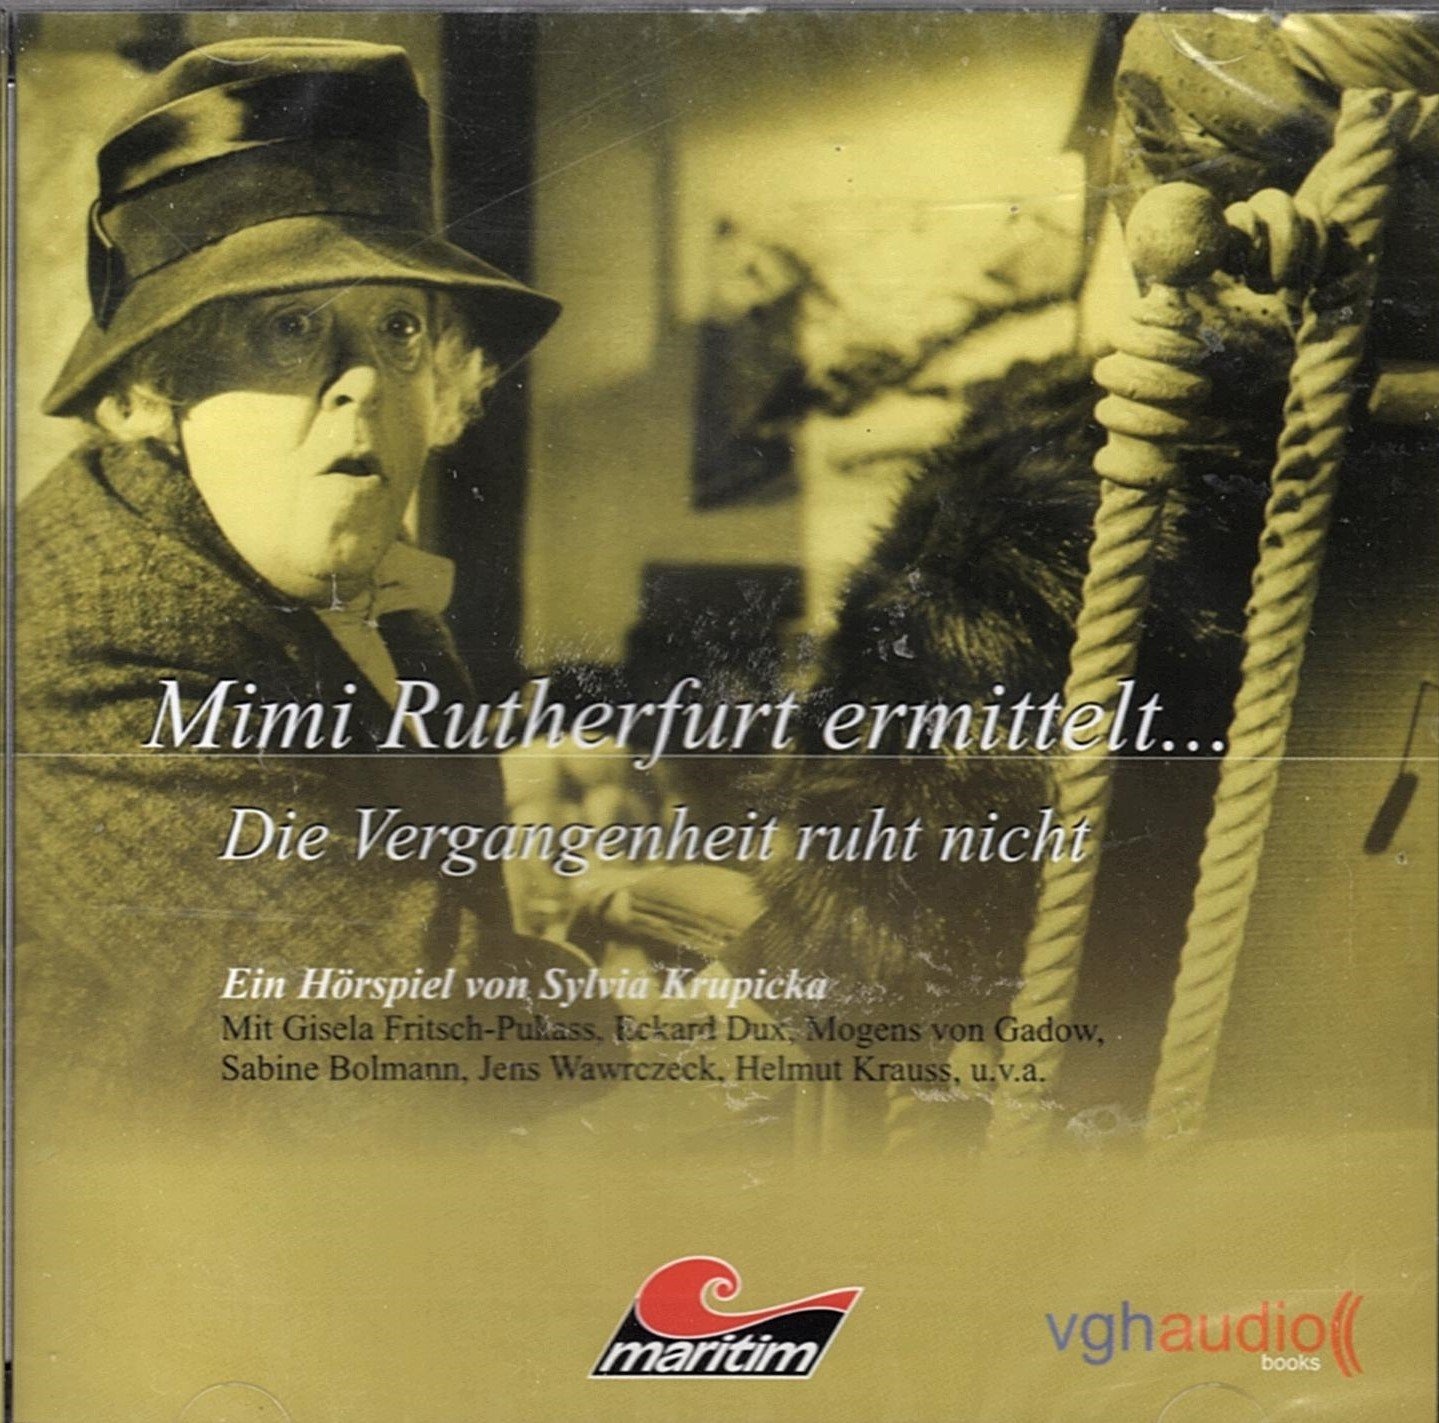 02-Mimi Rutherfurt Ermittelt (Neu differenzbesteuert)